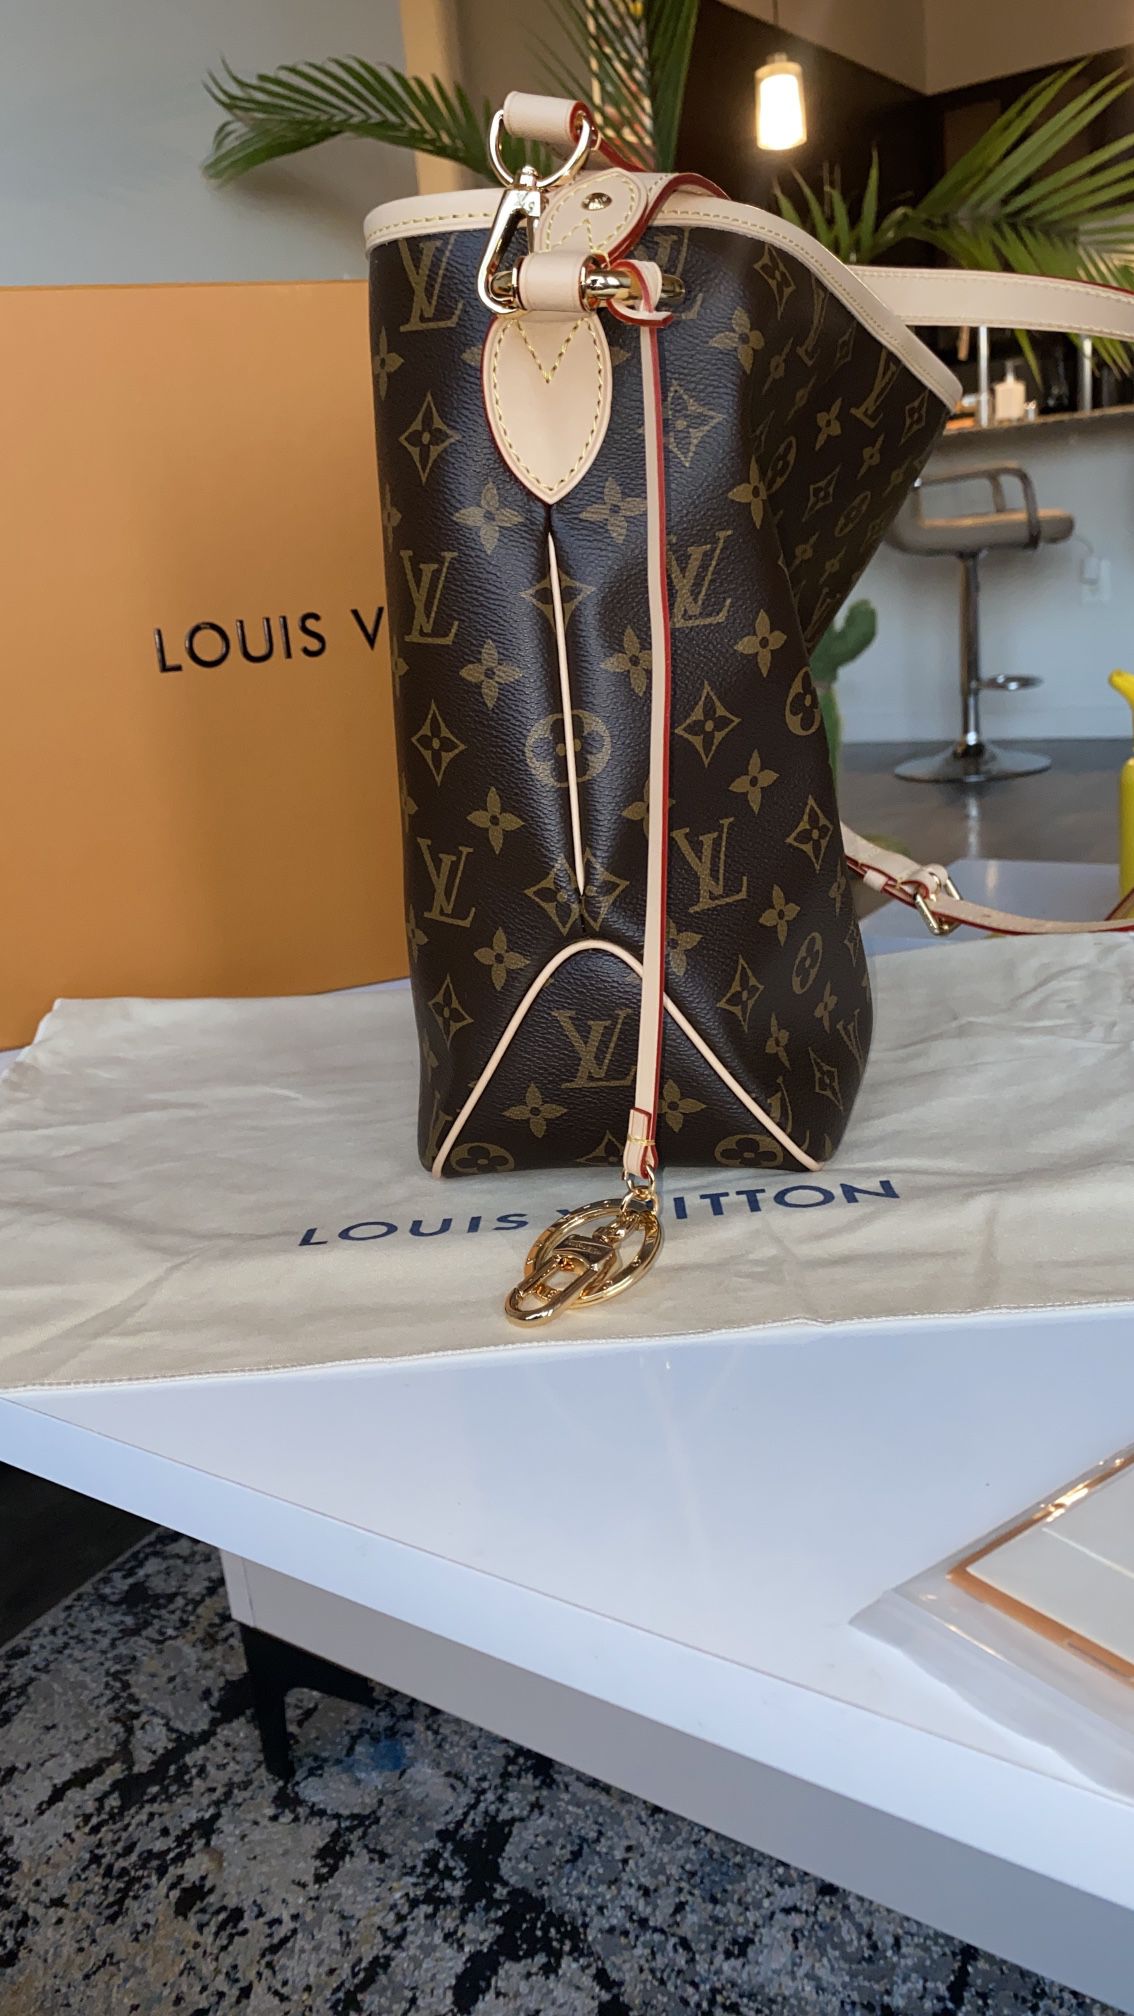 Authentic Louis Vuitton Monogram Vernis Alma MM for Sale in Hampton, MN -  OfferUp